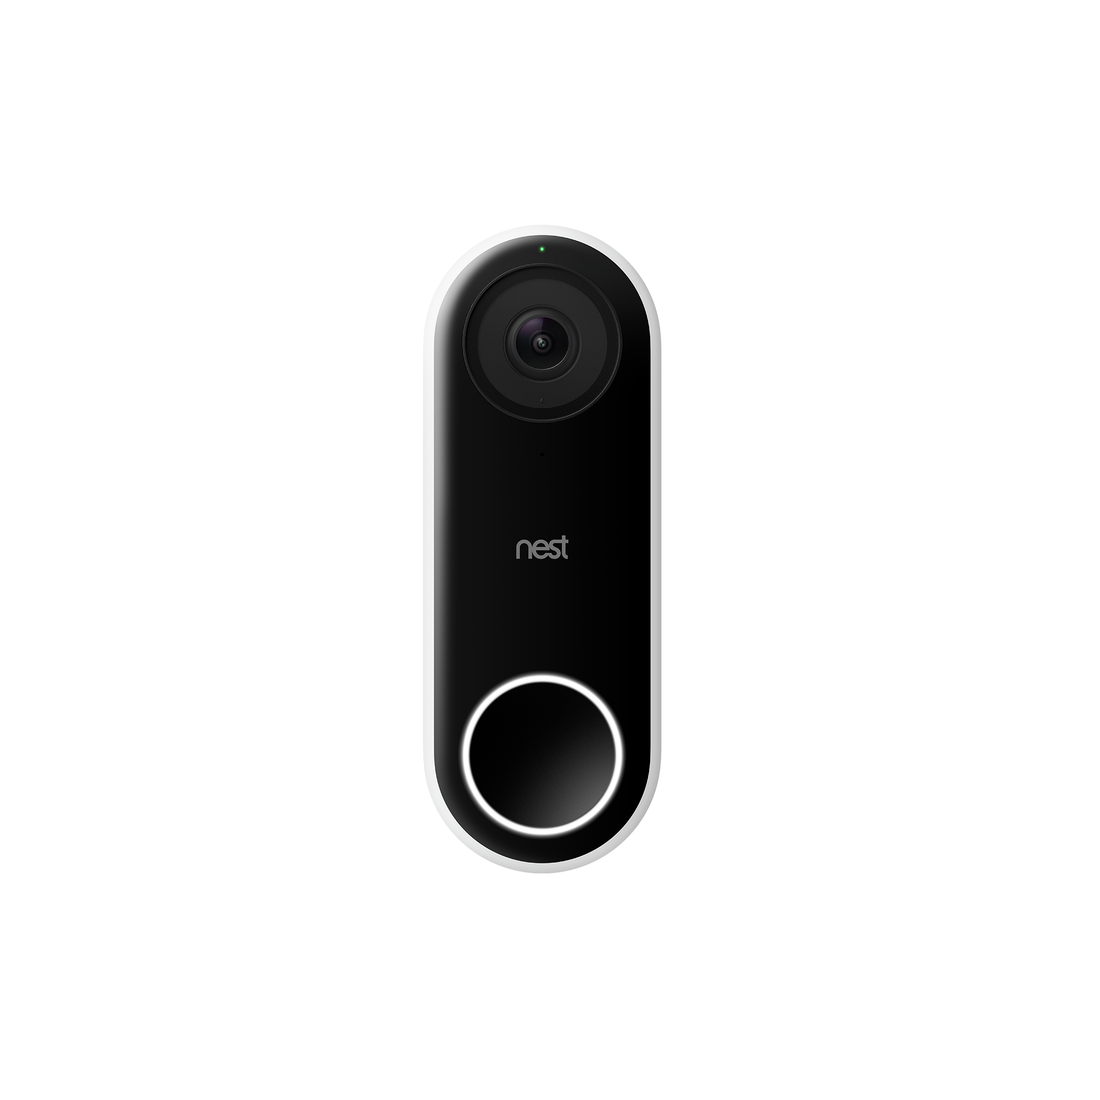 Google Nest Hello video doorbell. Opportunity is knocking.